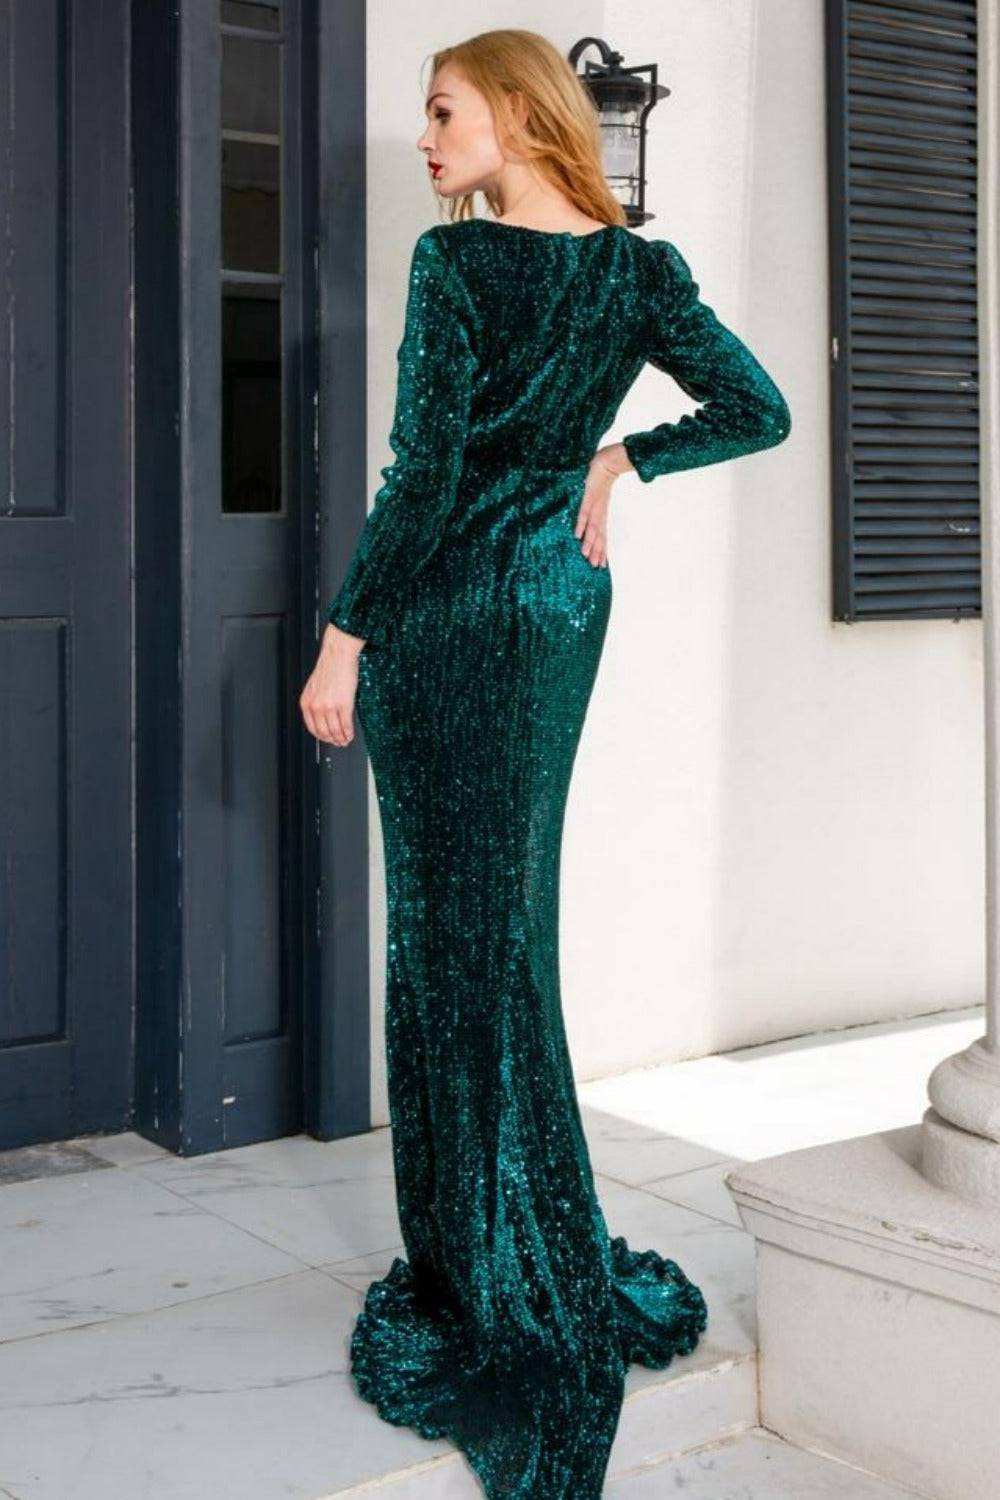 Plus Size Emerald Green Sequins Maxi Dress - TGC Boutique - Evening Gown